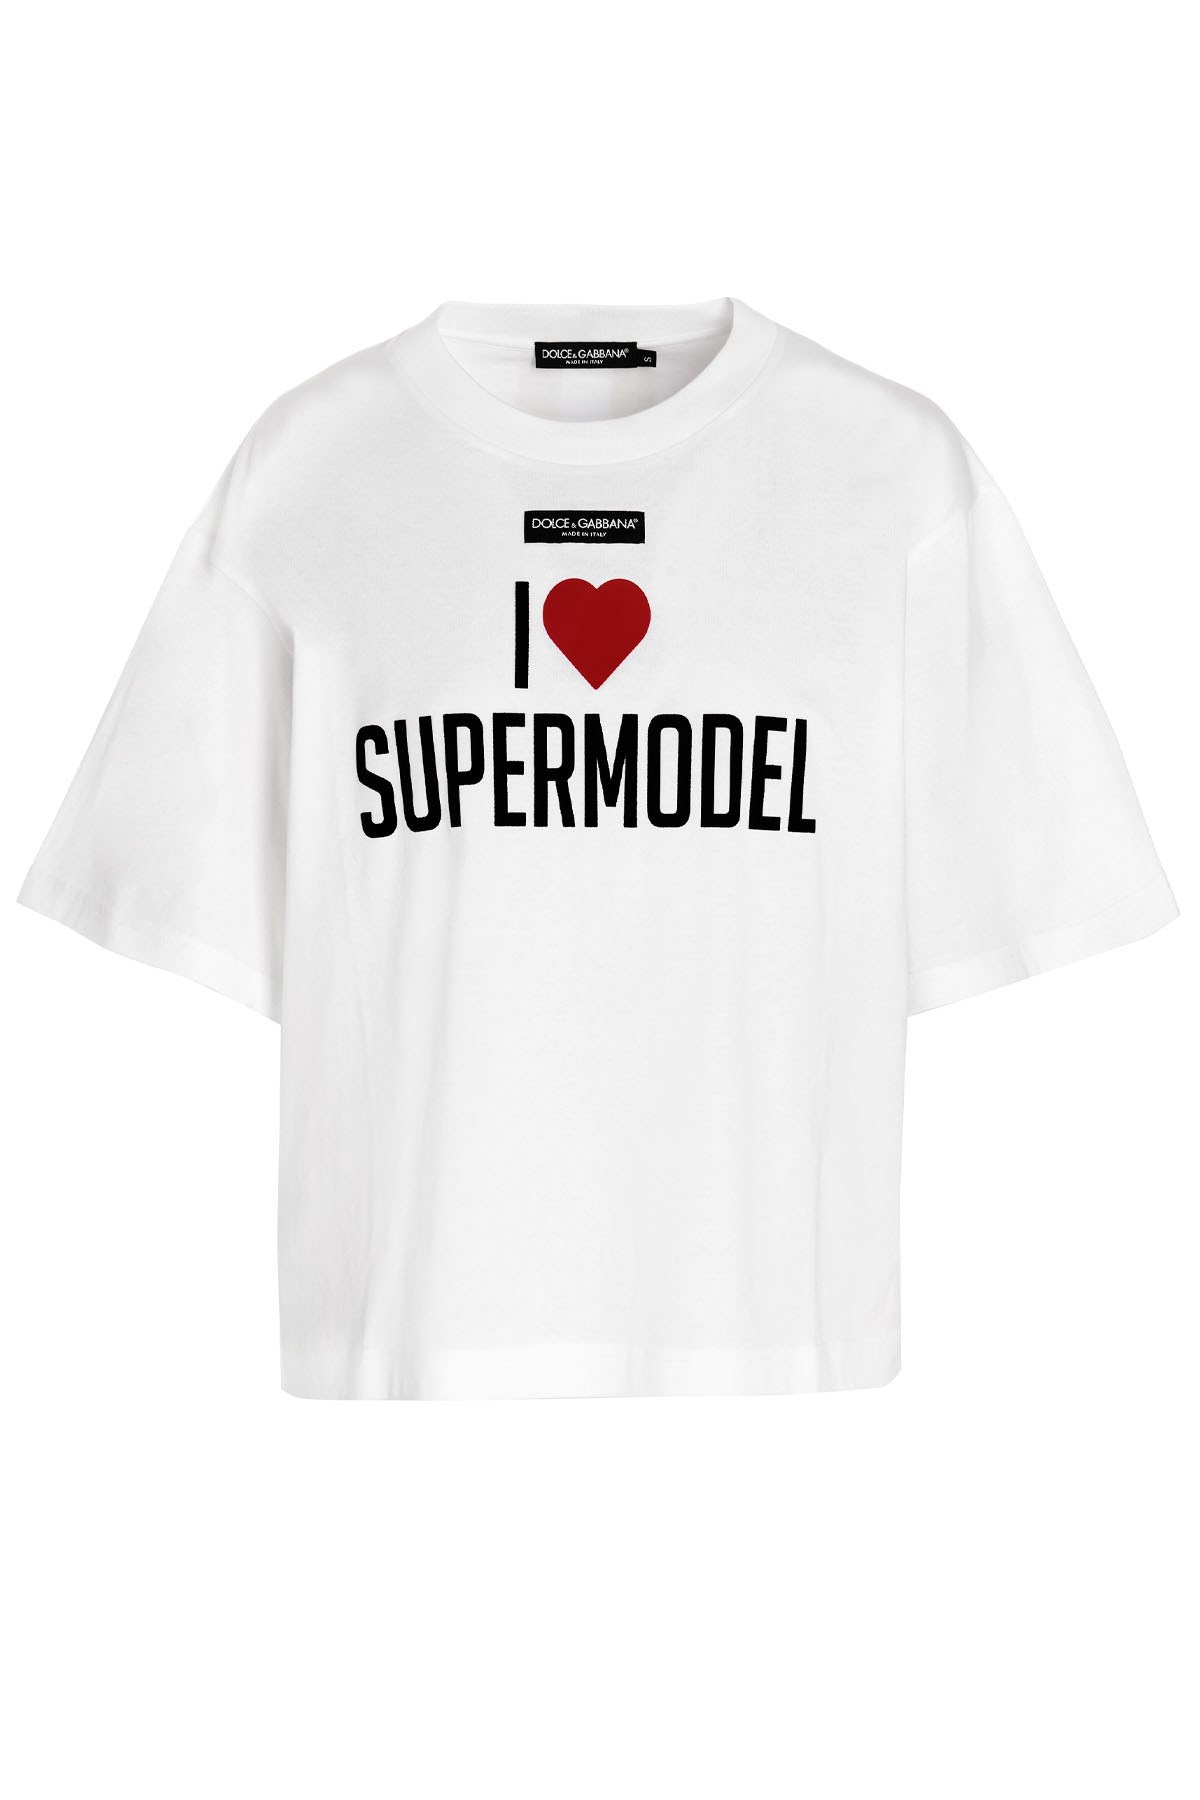 DOLCE & GABBANA T-Shirt 'Supermodel' Mit Print